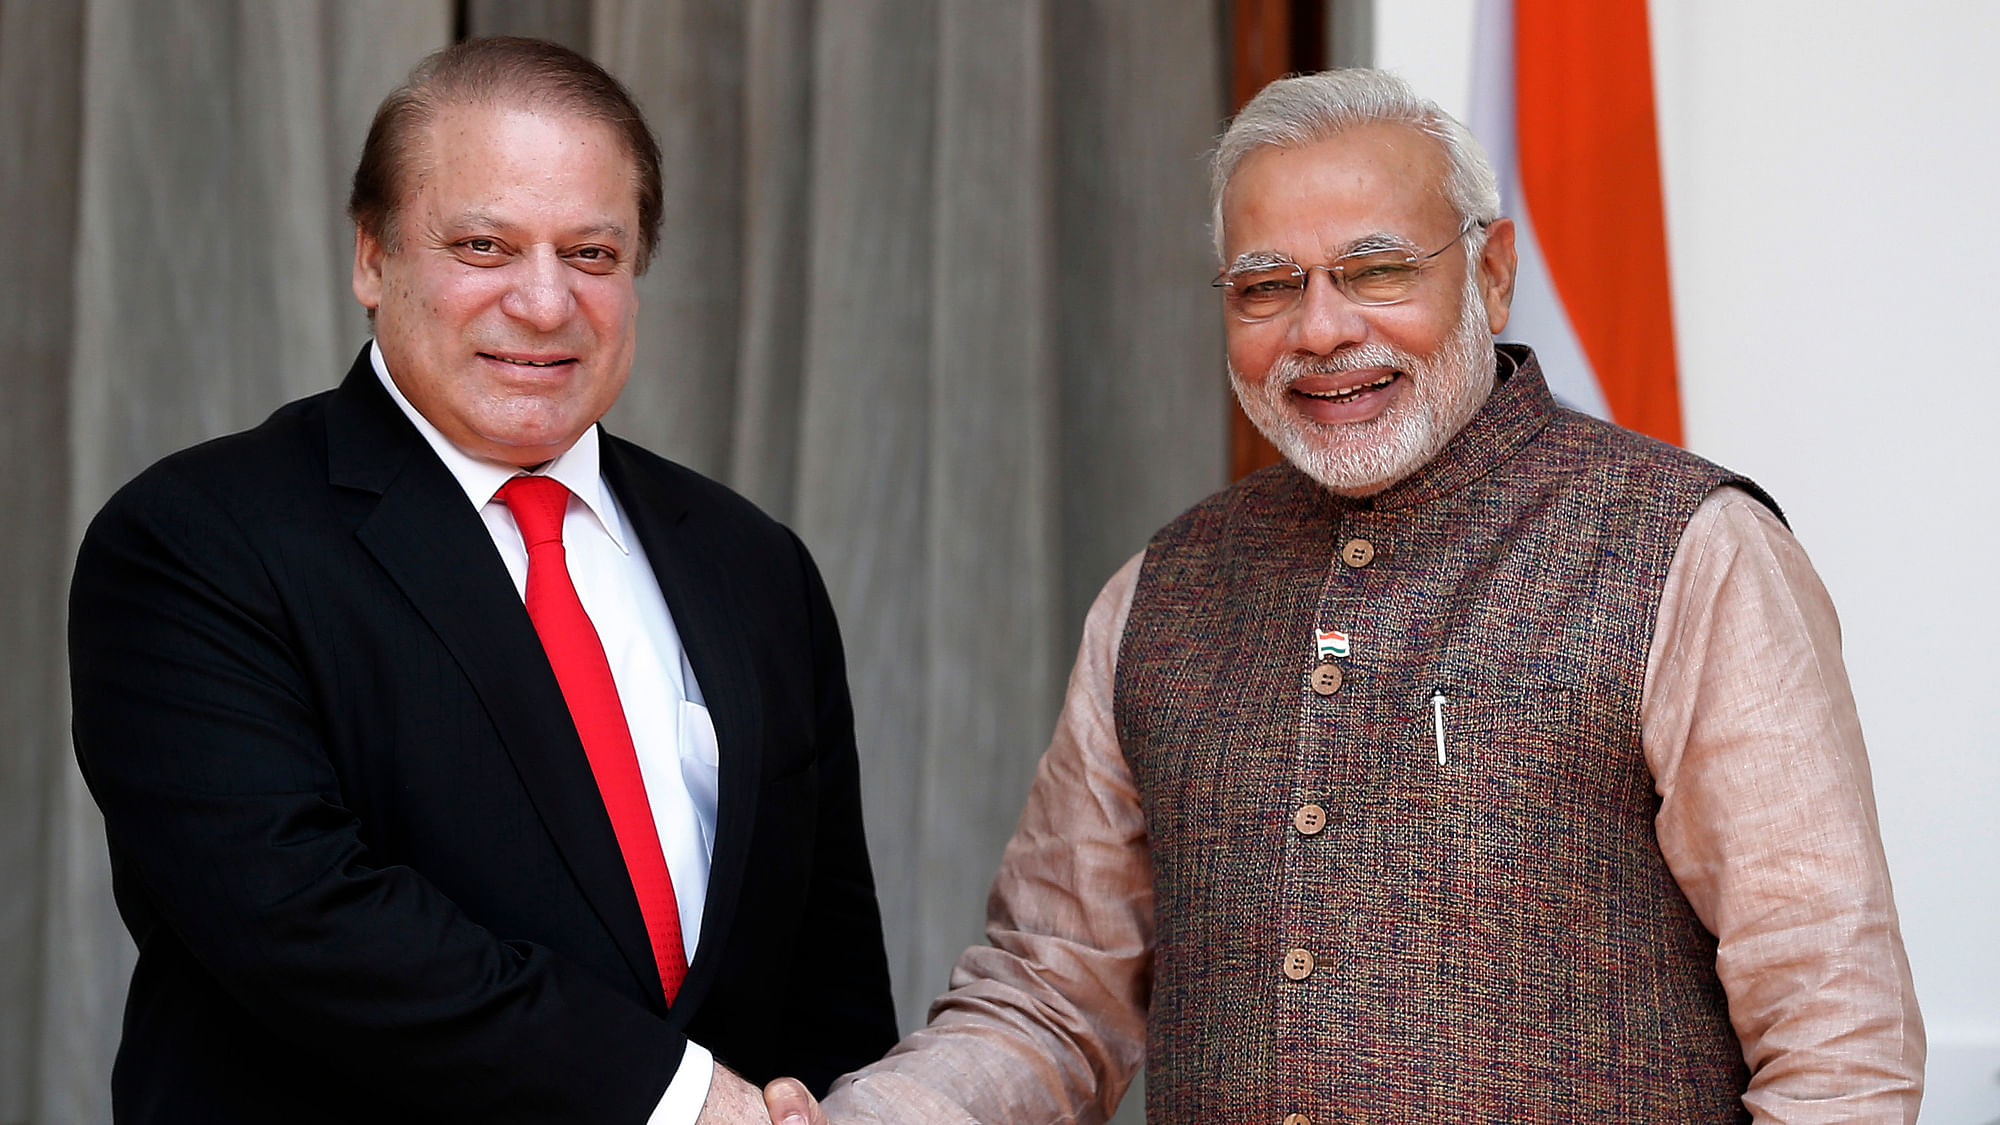  Nawaz Sharif and Narendra Modi in happier times. (Photo: Reuters)